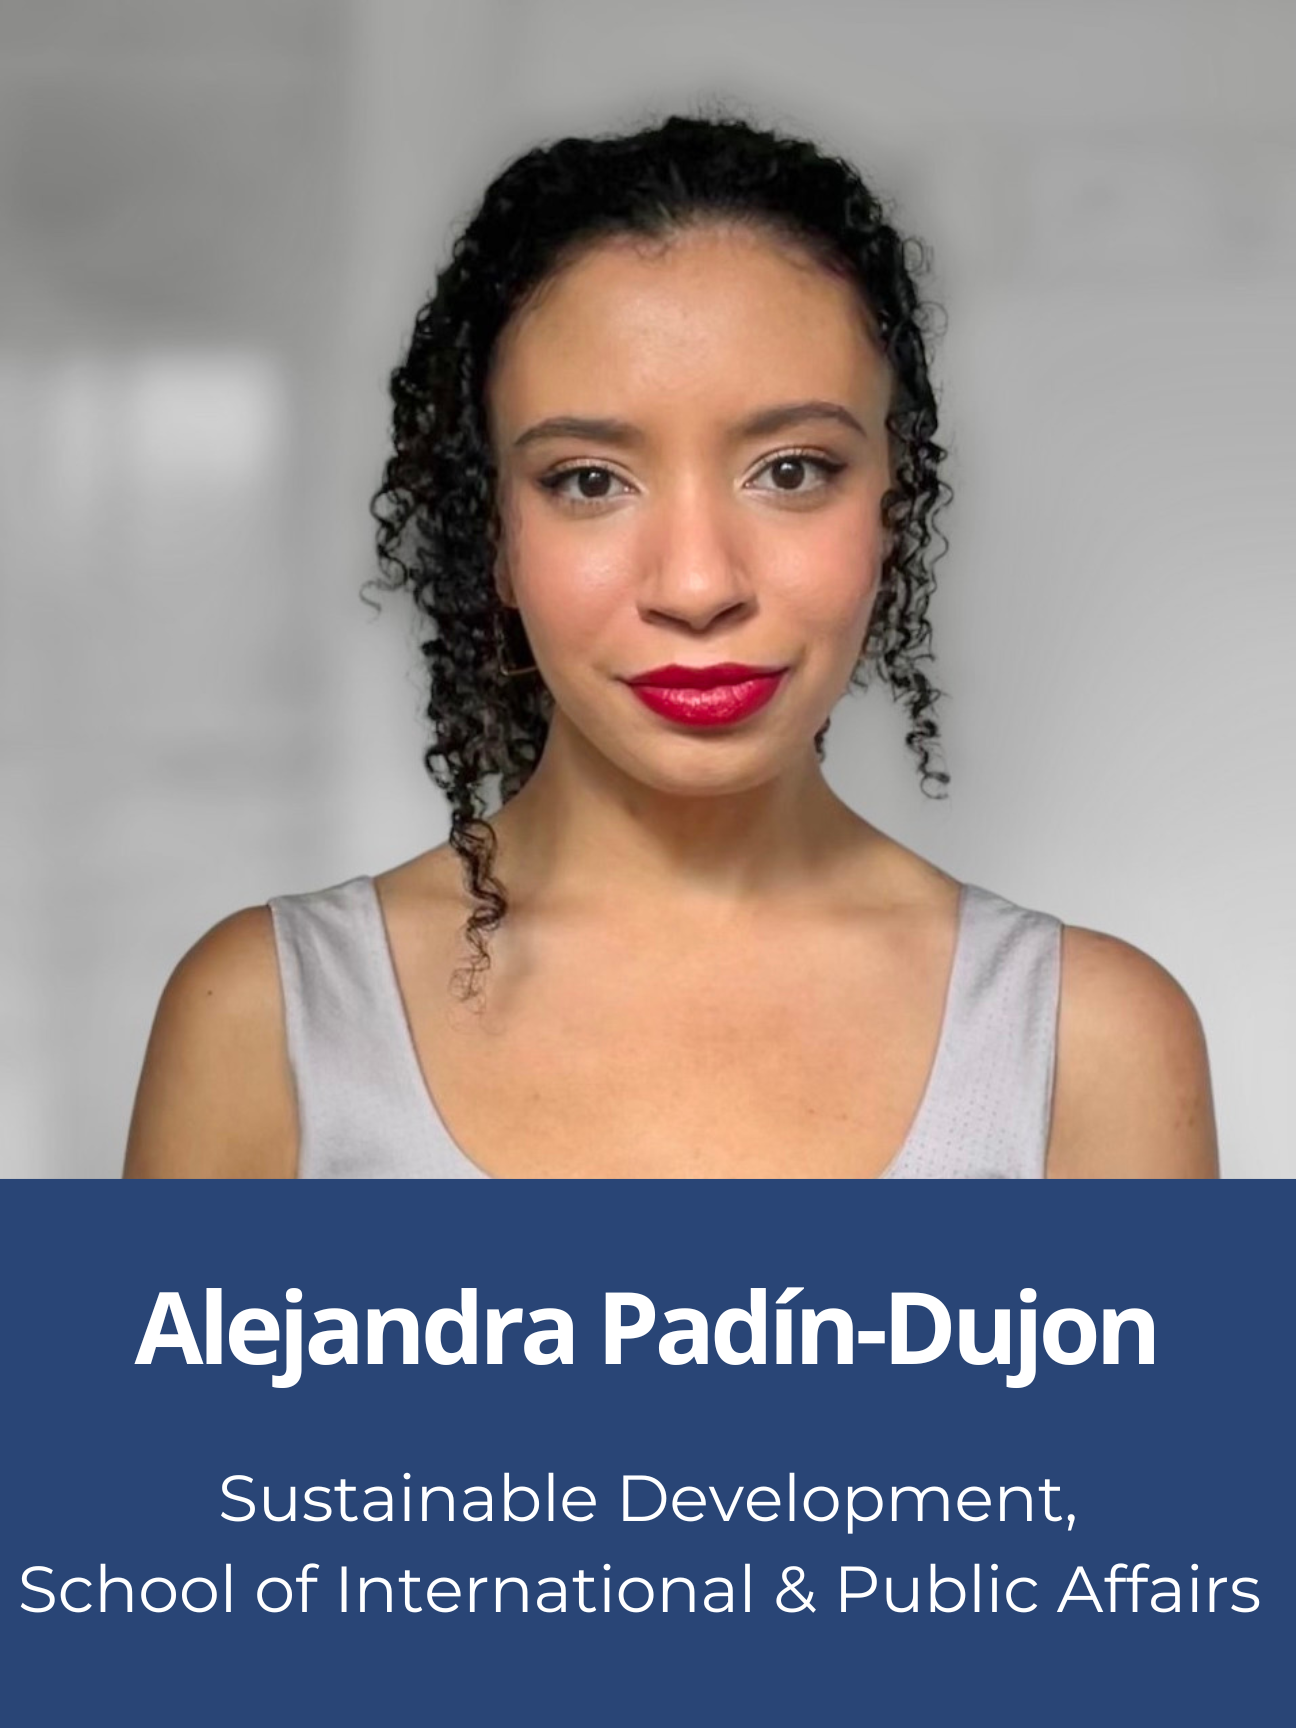 Alejandra Padín-Dujon, Sustainable Development,
School of International & Public Affairs 